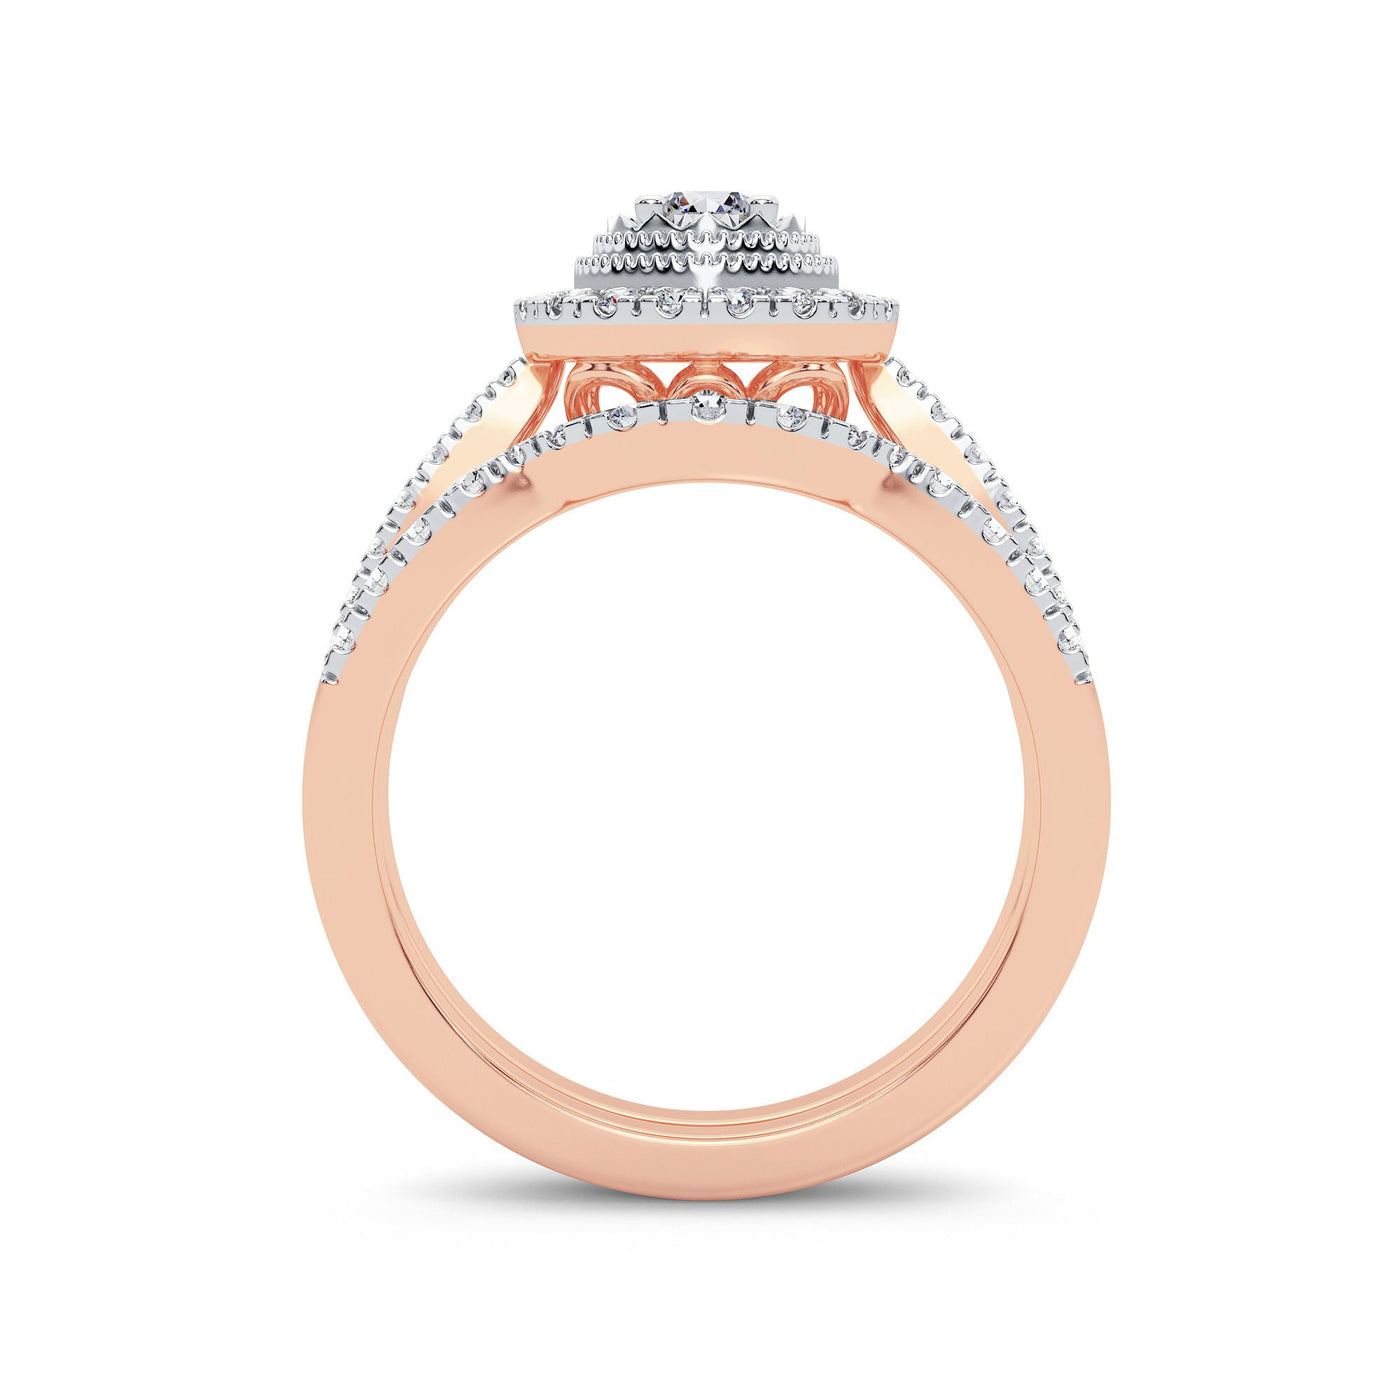 14K 0.75CT Diamond Bridal Ring